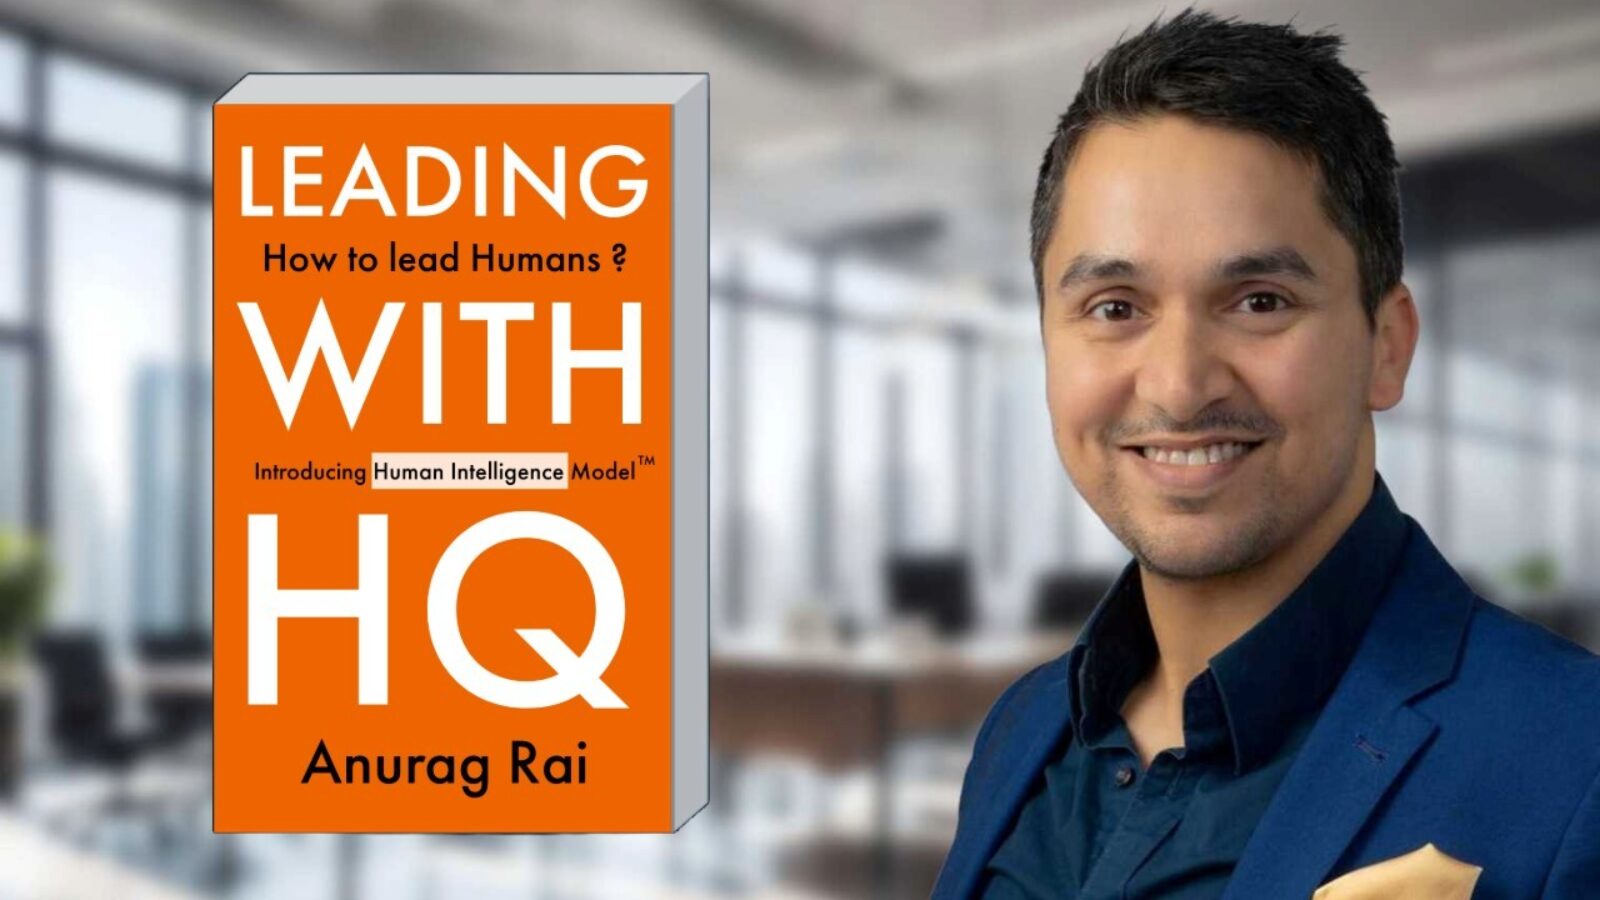 New leadership book by Anurag Rai tops Amazon's bestseller list